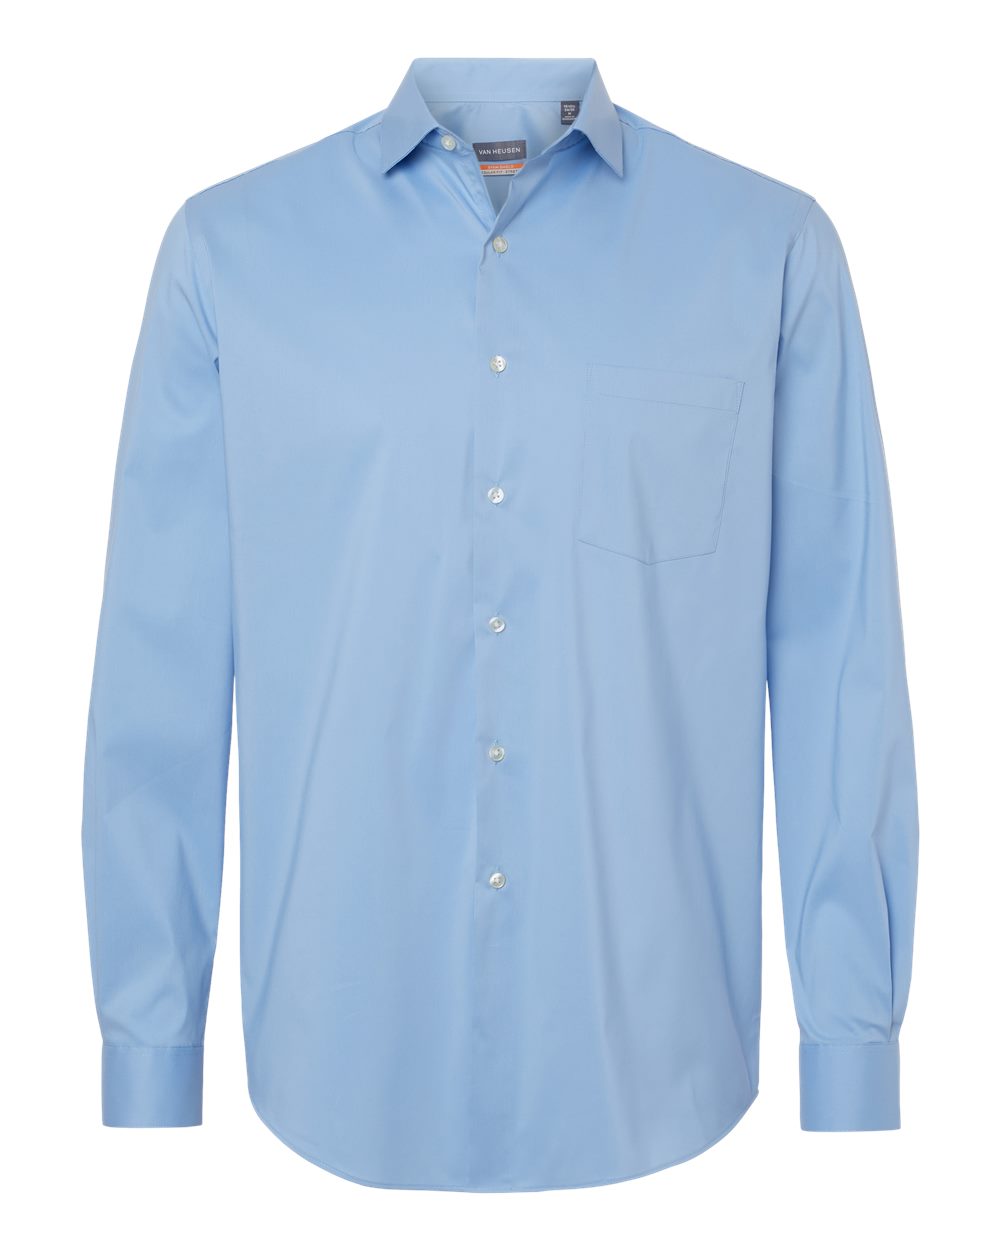 Van Heusen 13V0476 - Stainshield Essential Shirt $36.60